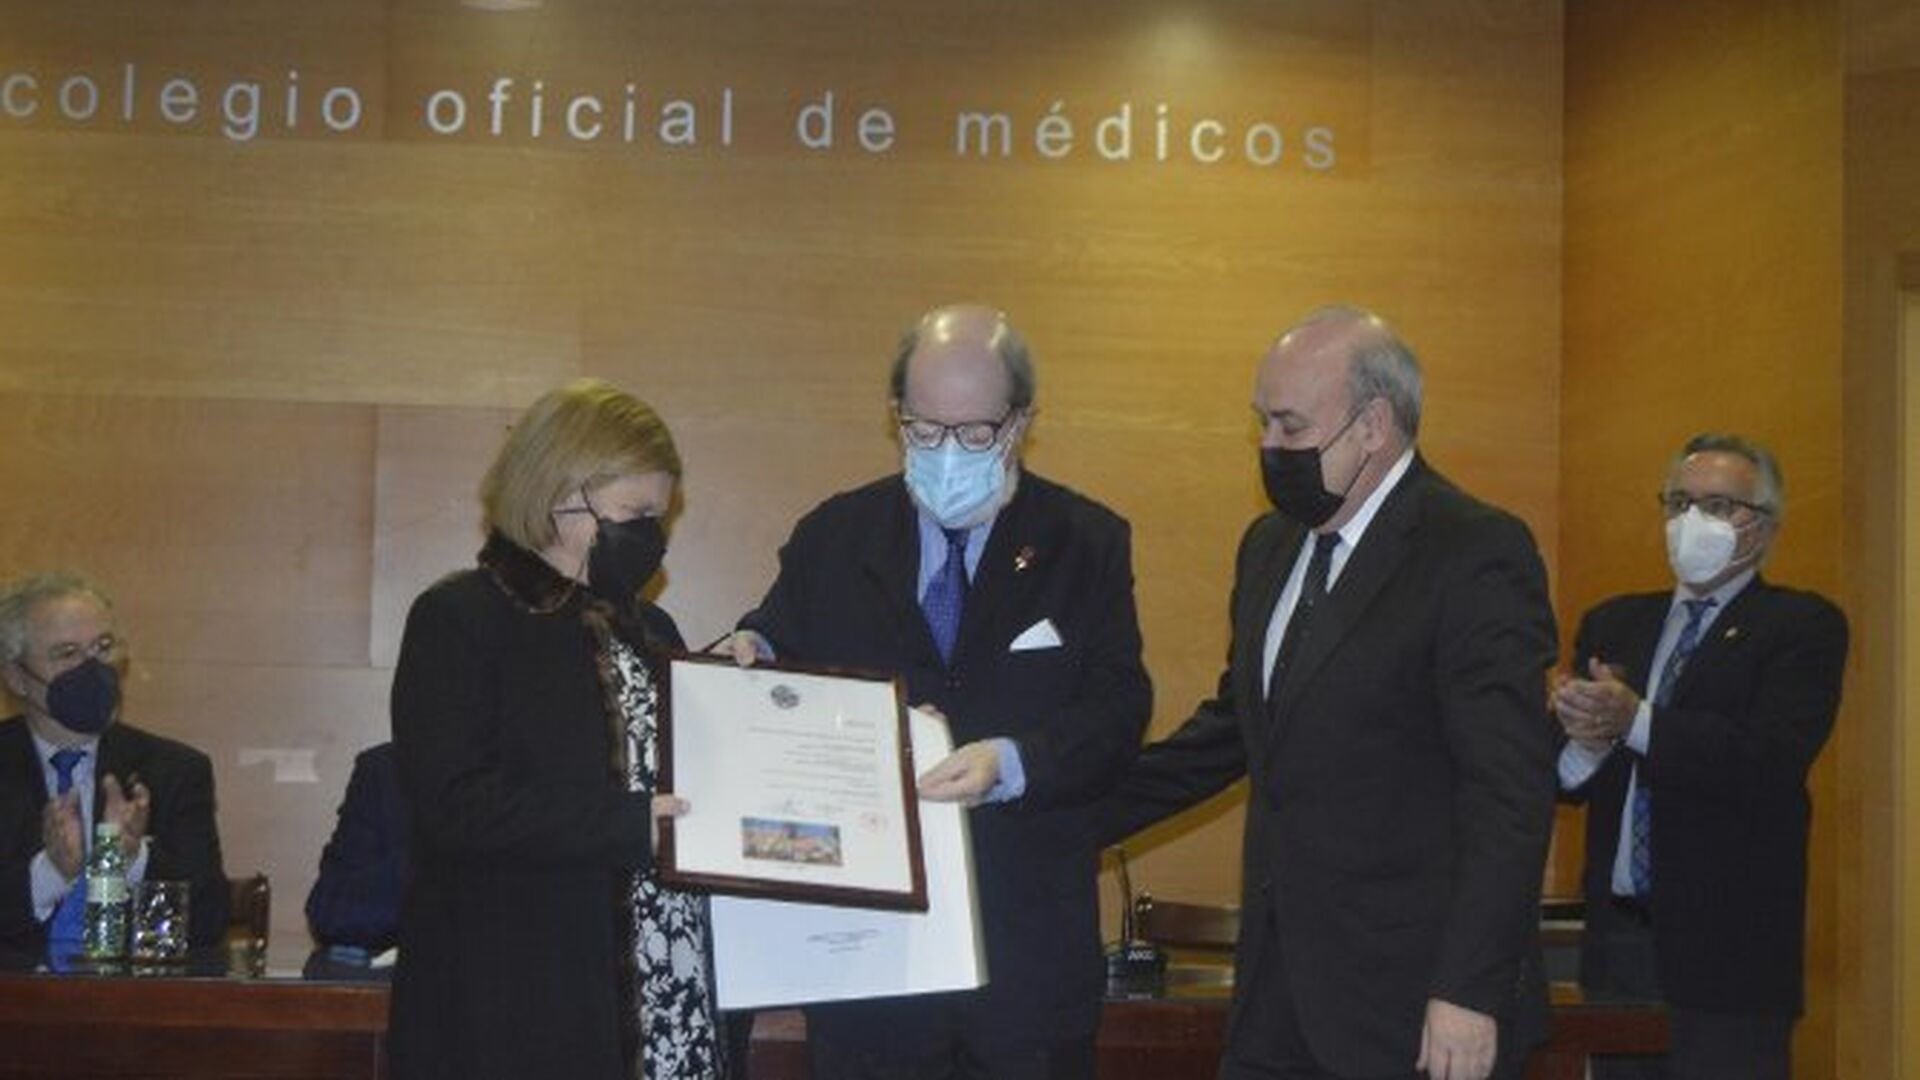 Olimpia Mart&iacute;n Fondevila entregando el premio a Juan Manuel Fern&aacute;ndez y Mar&iacute;a de la Sierra P&eacute;rez.